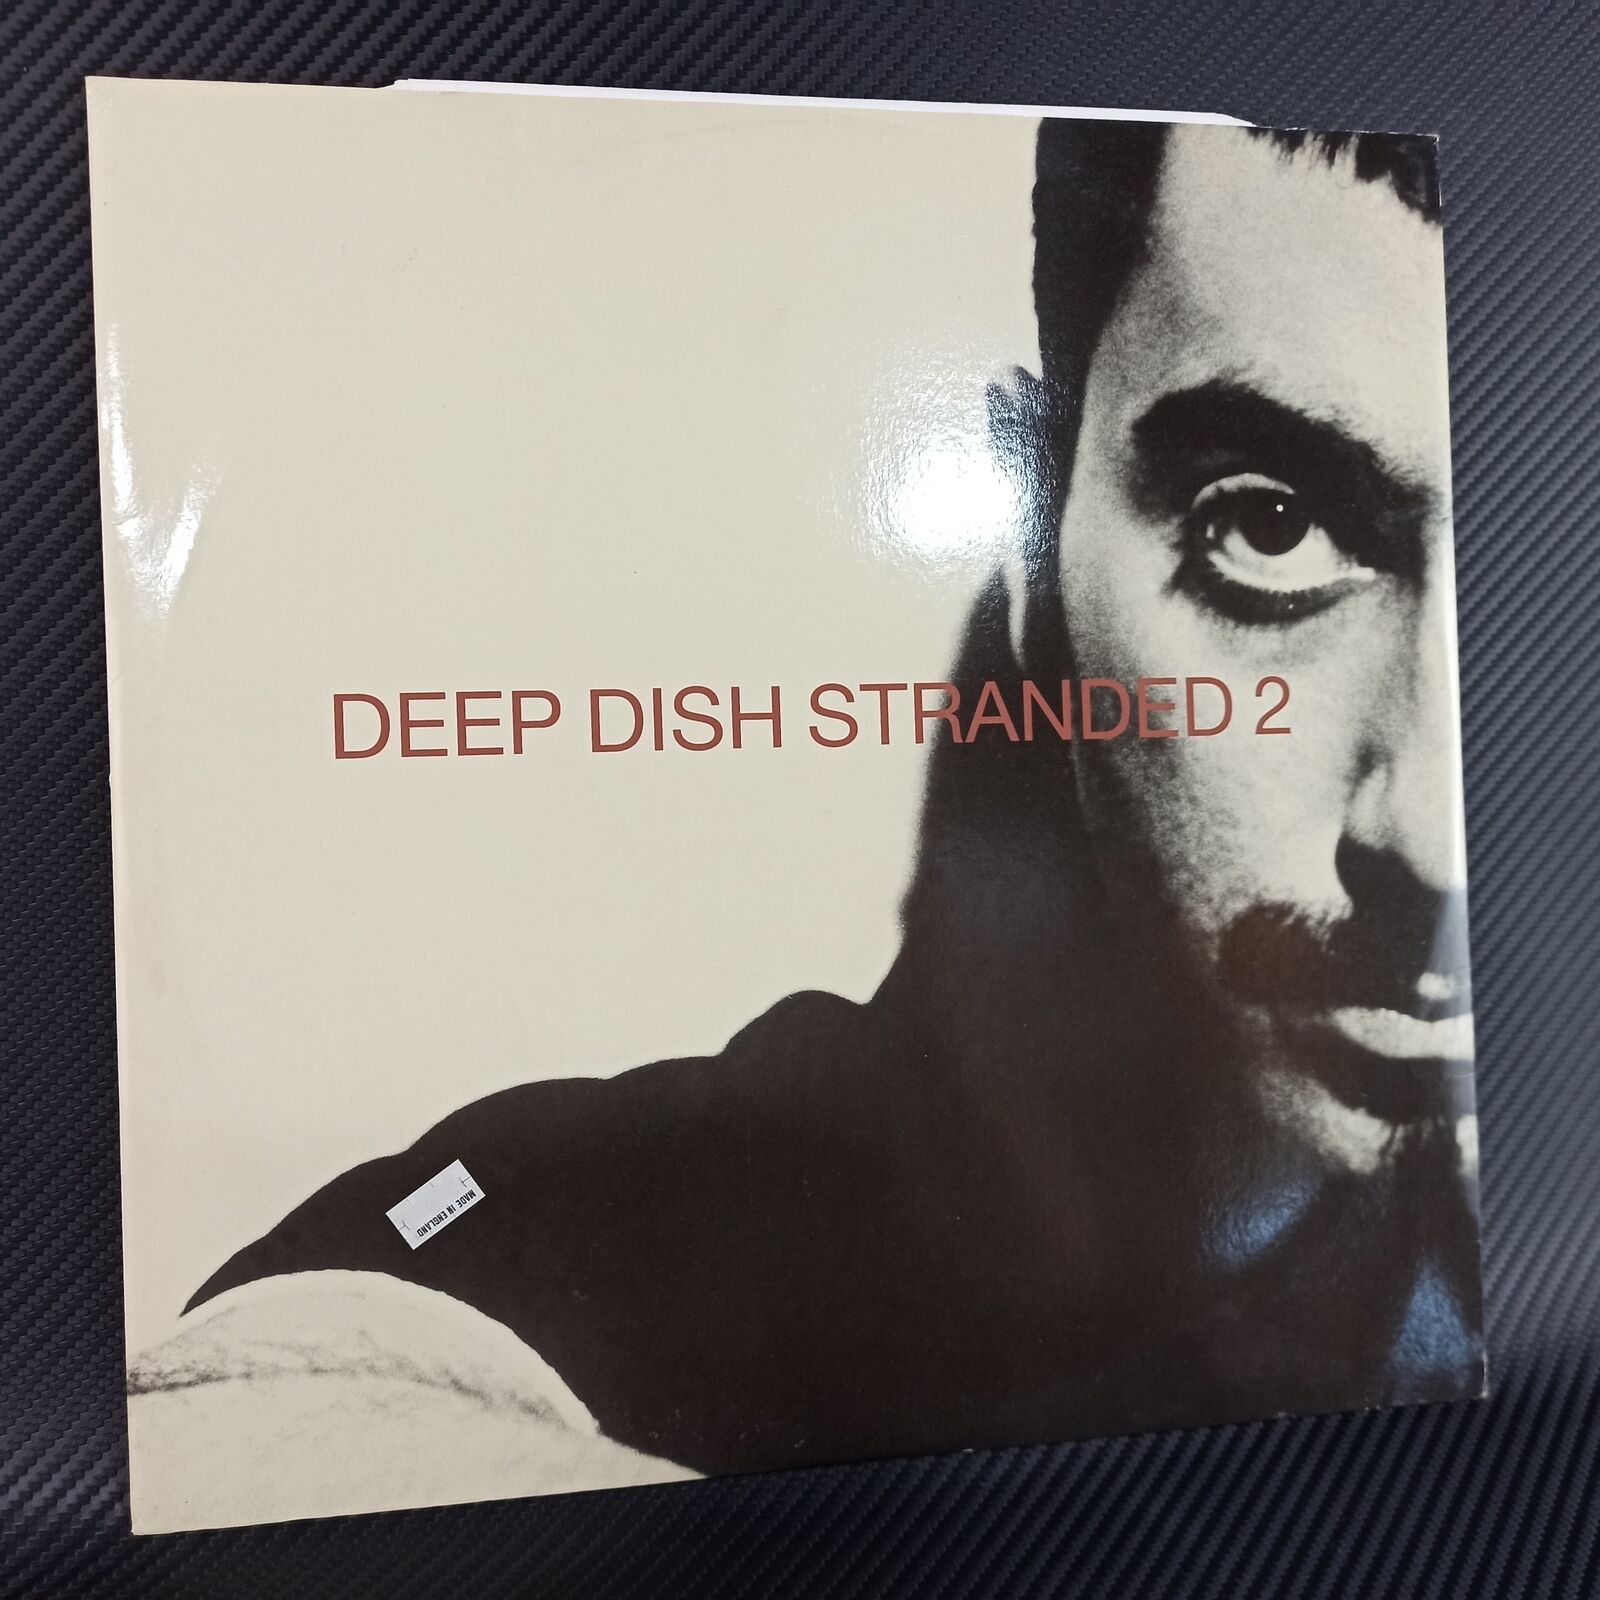 Deep Dish Stranded 2 Vinyl LP Single (1997, Deconstruction) (Mint/Mint)